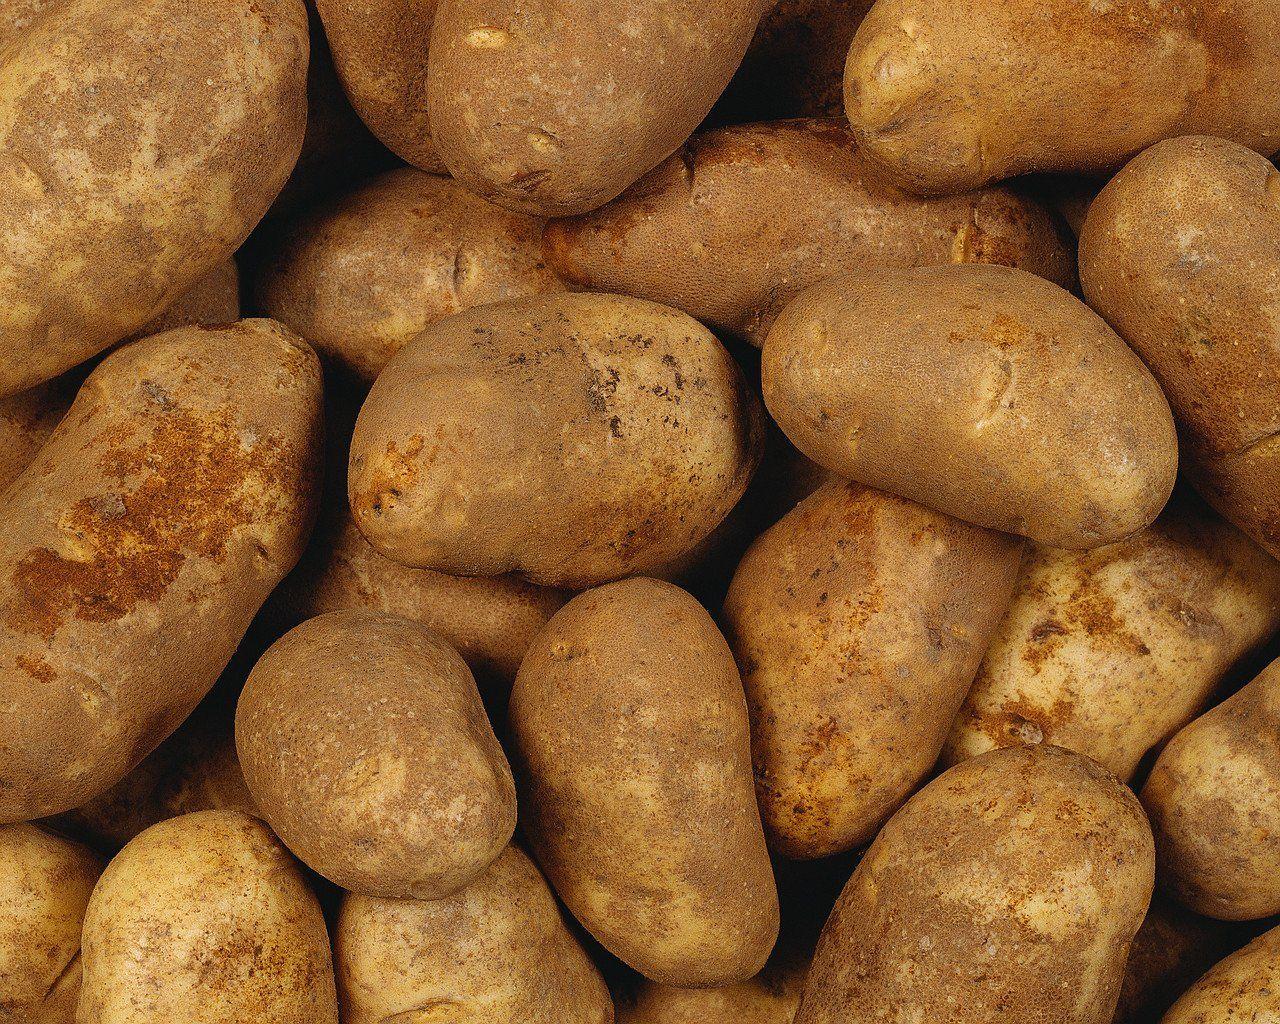 Potato Wallpaper and Background Imagex1024